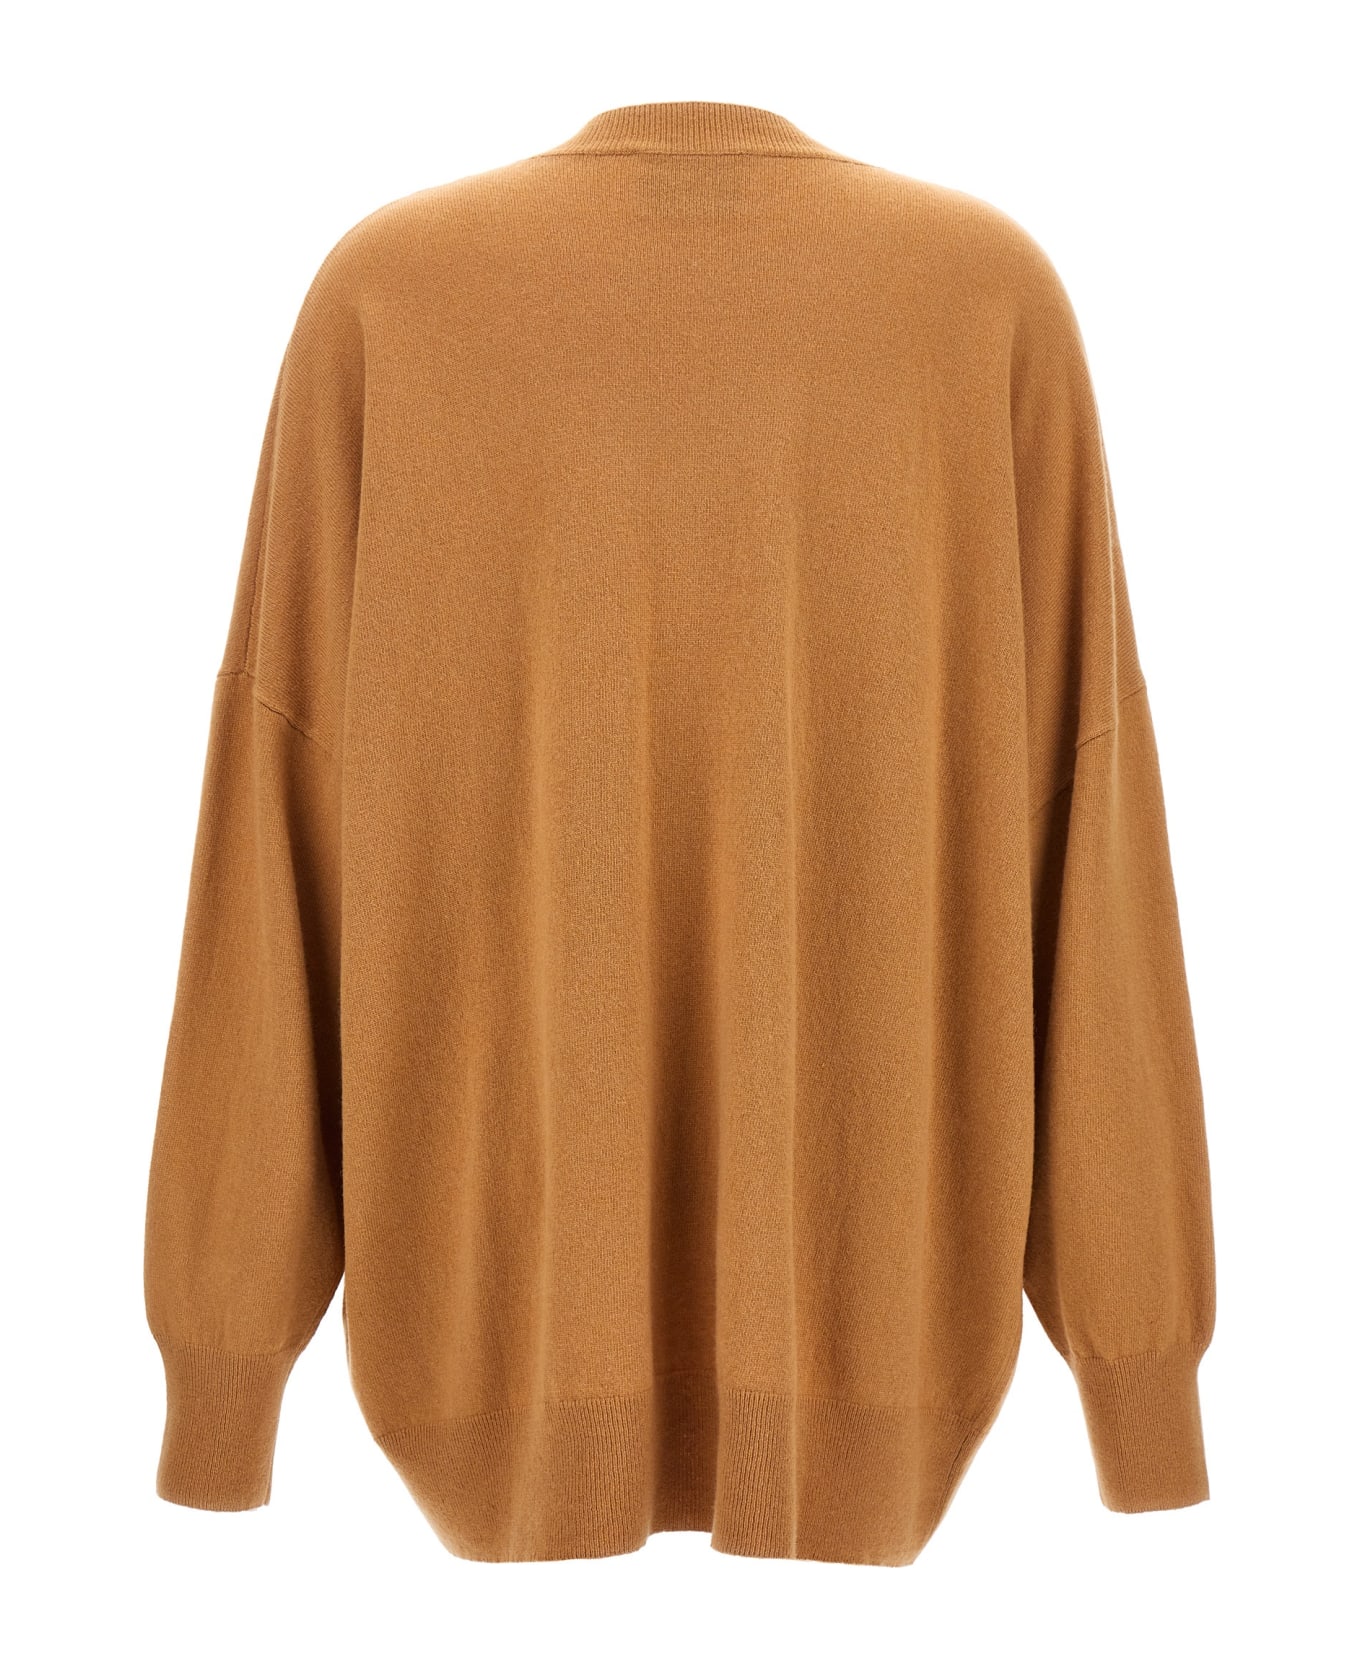 (nude) Oversize Sweater - Beige ニットウェア